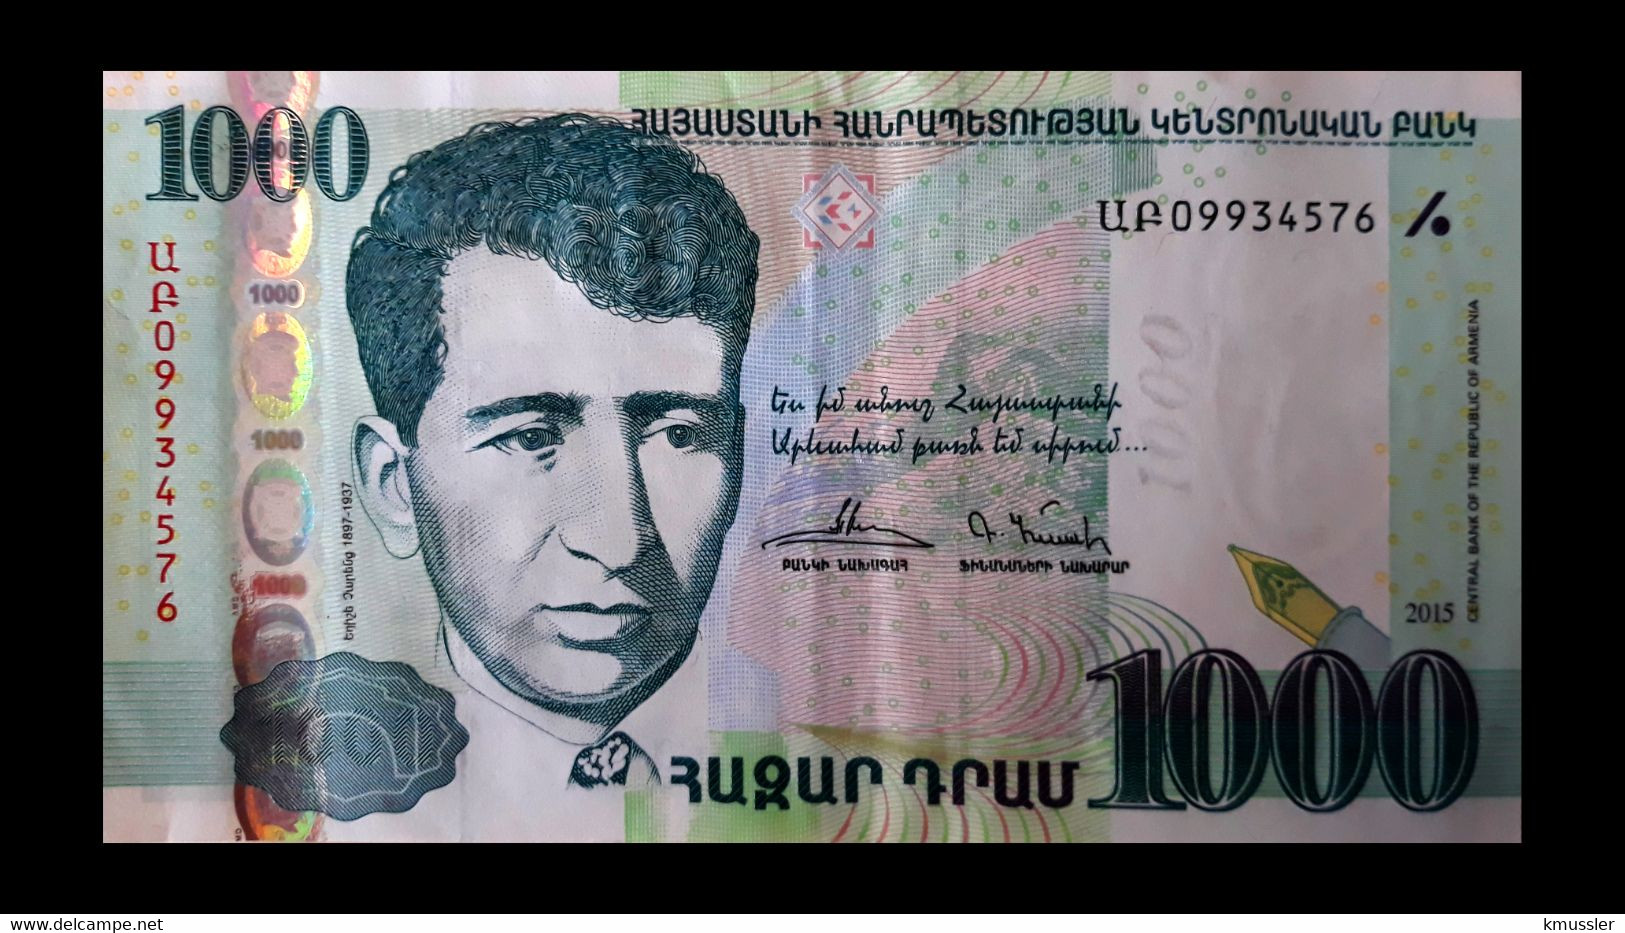 # # # Banknote Aus Armenien 1.000 Dram AU # # # - Armenien